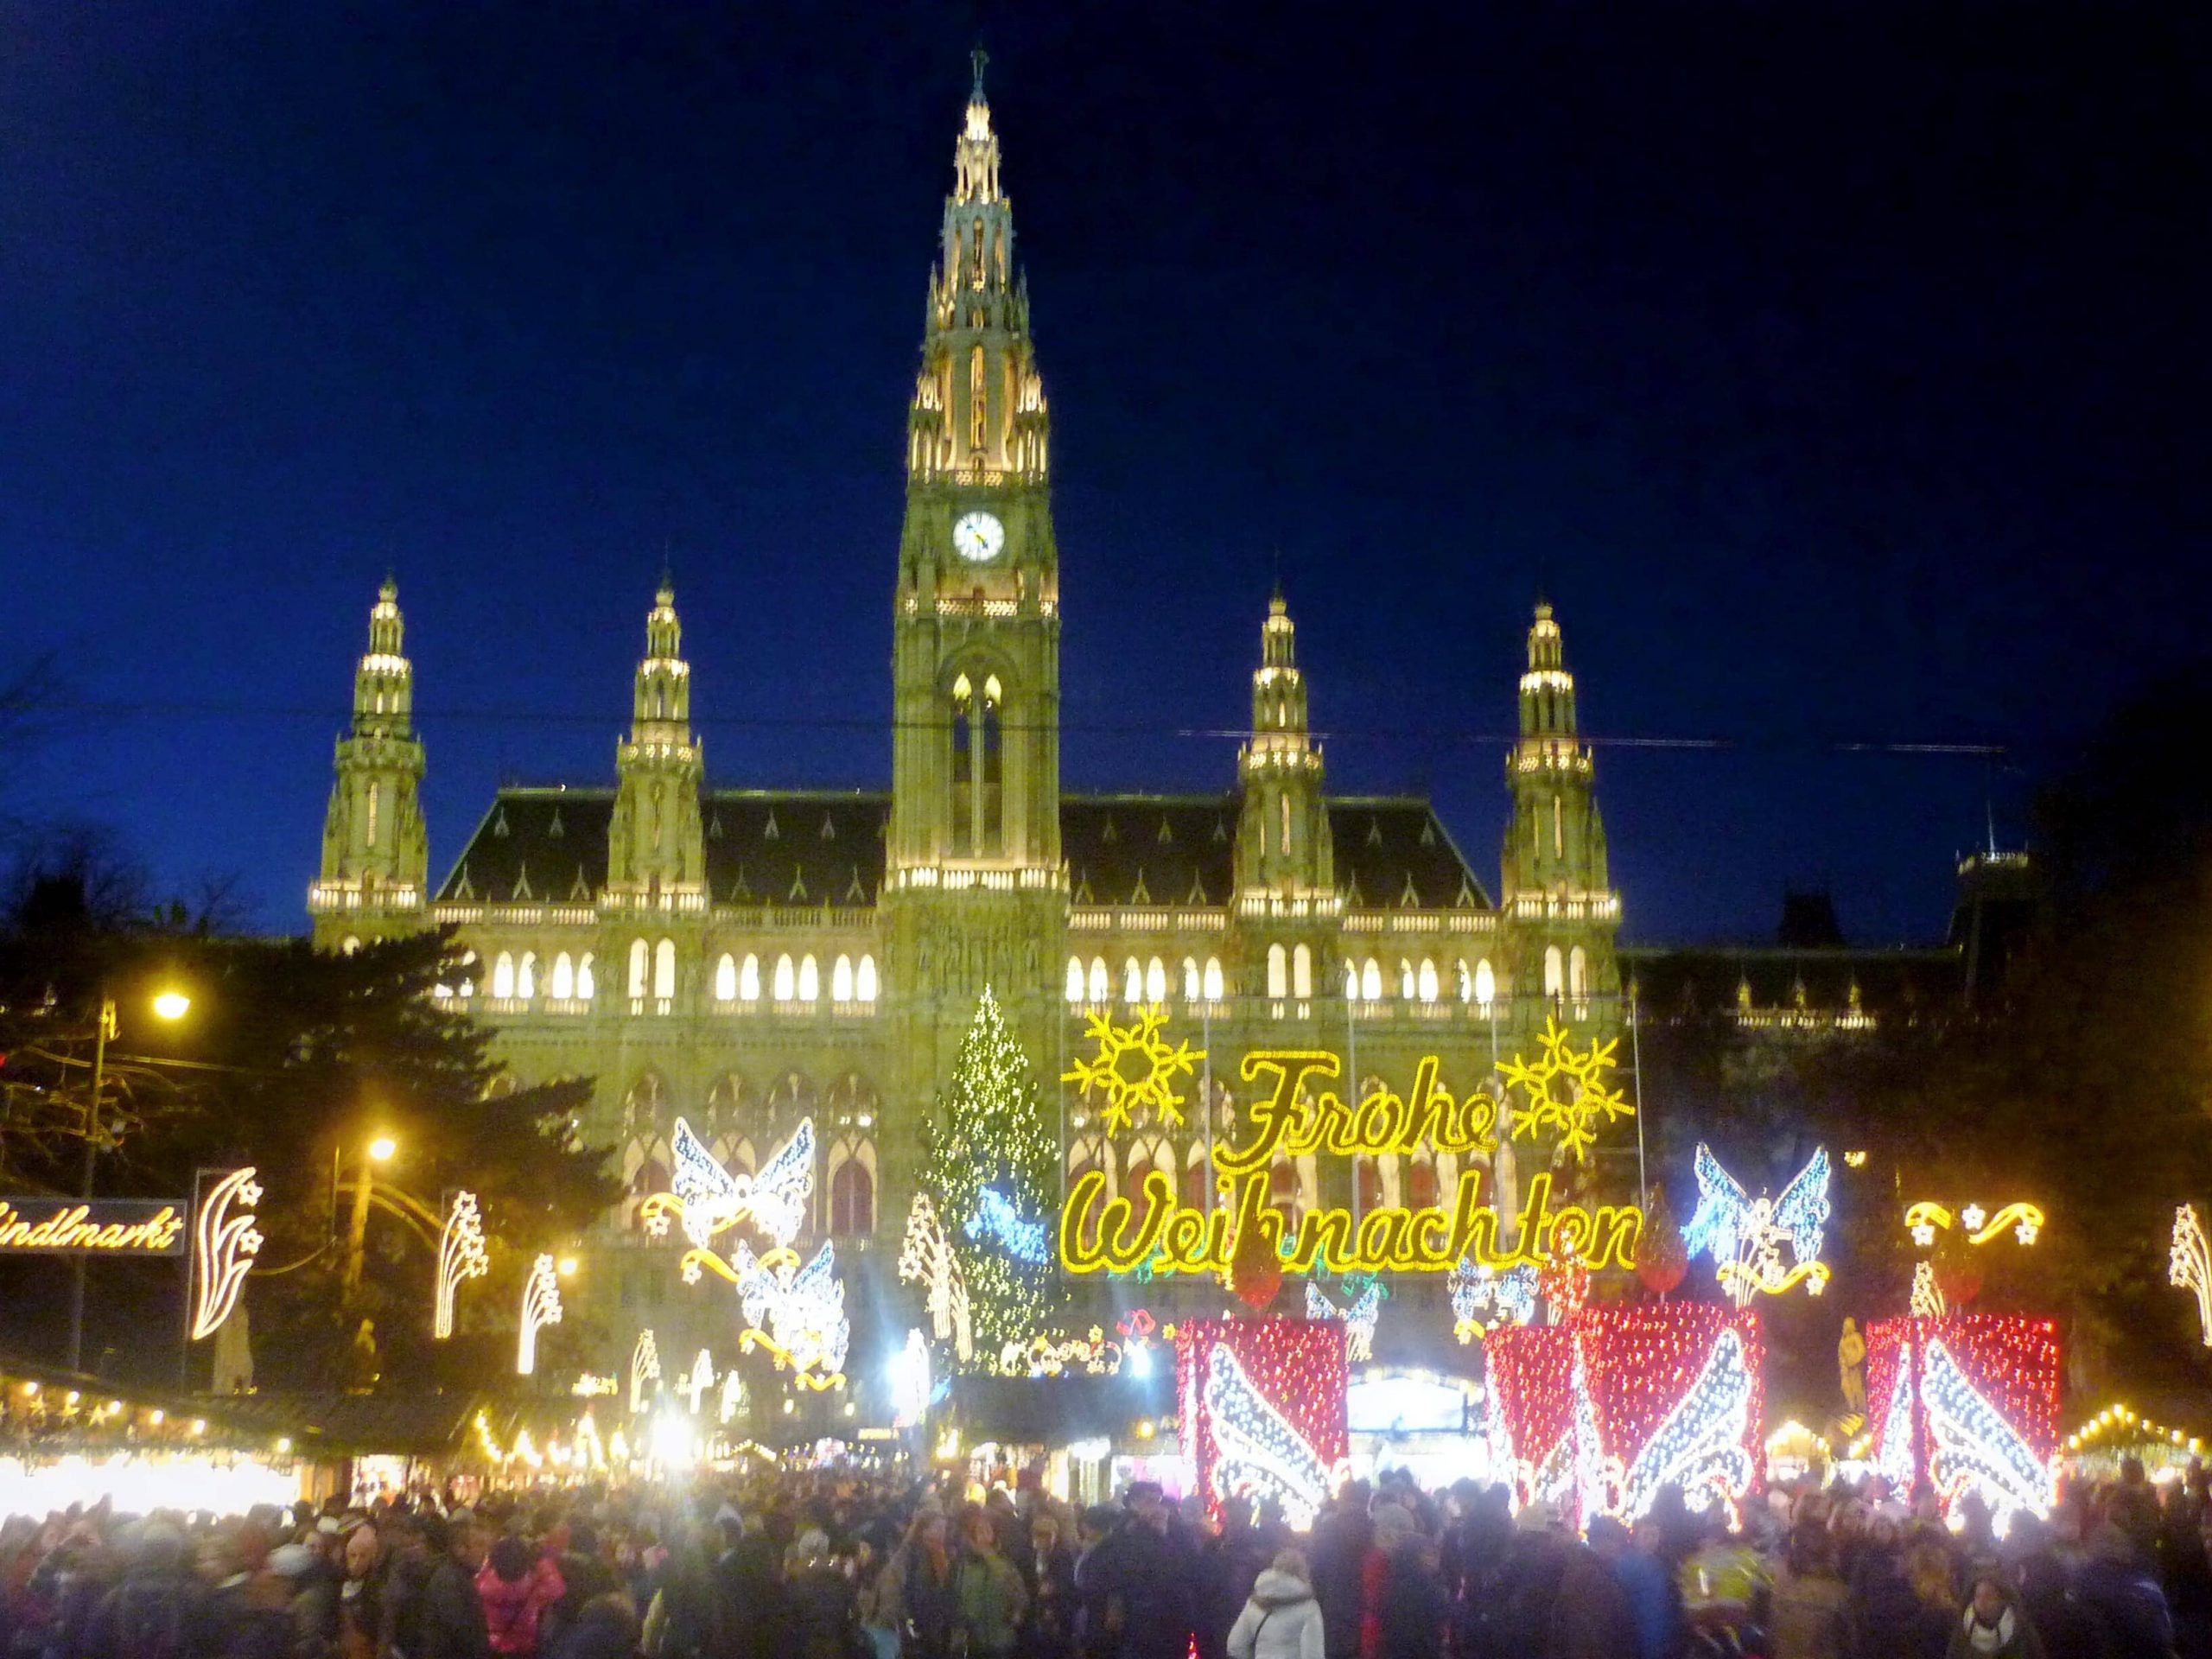 Vienna City Hall (Wiener Rathaus) during Christmas